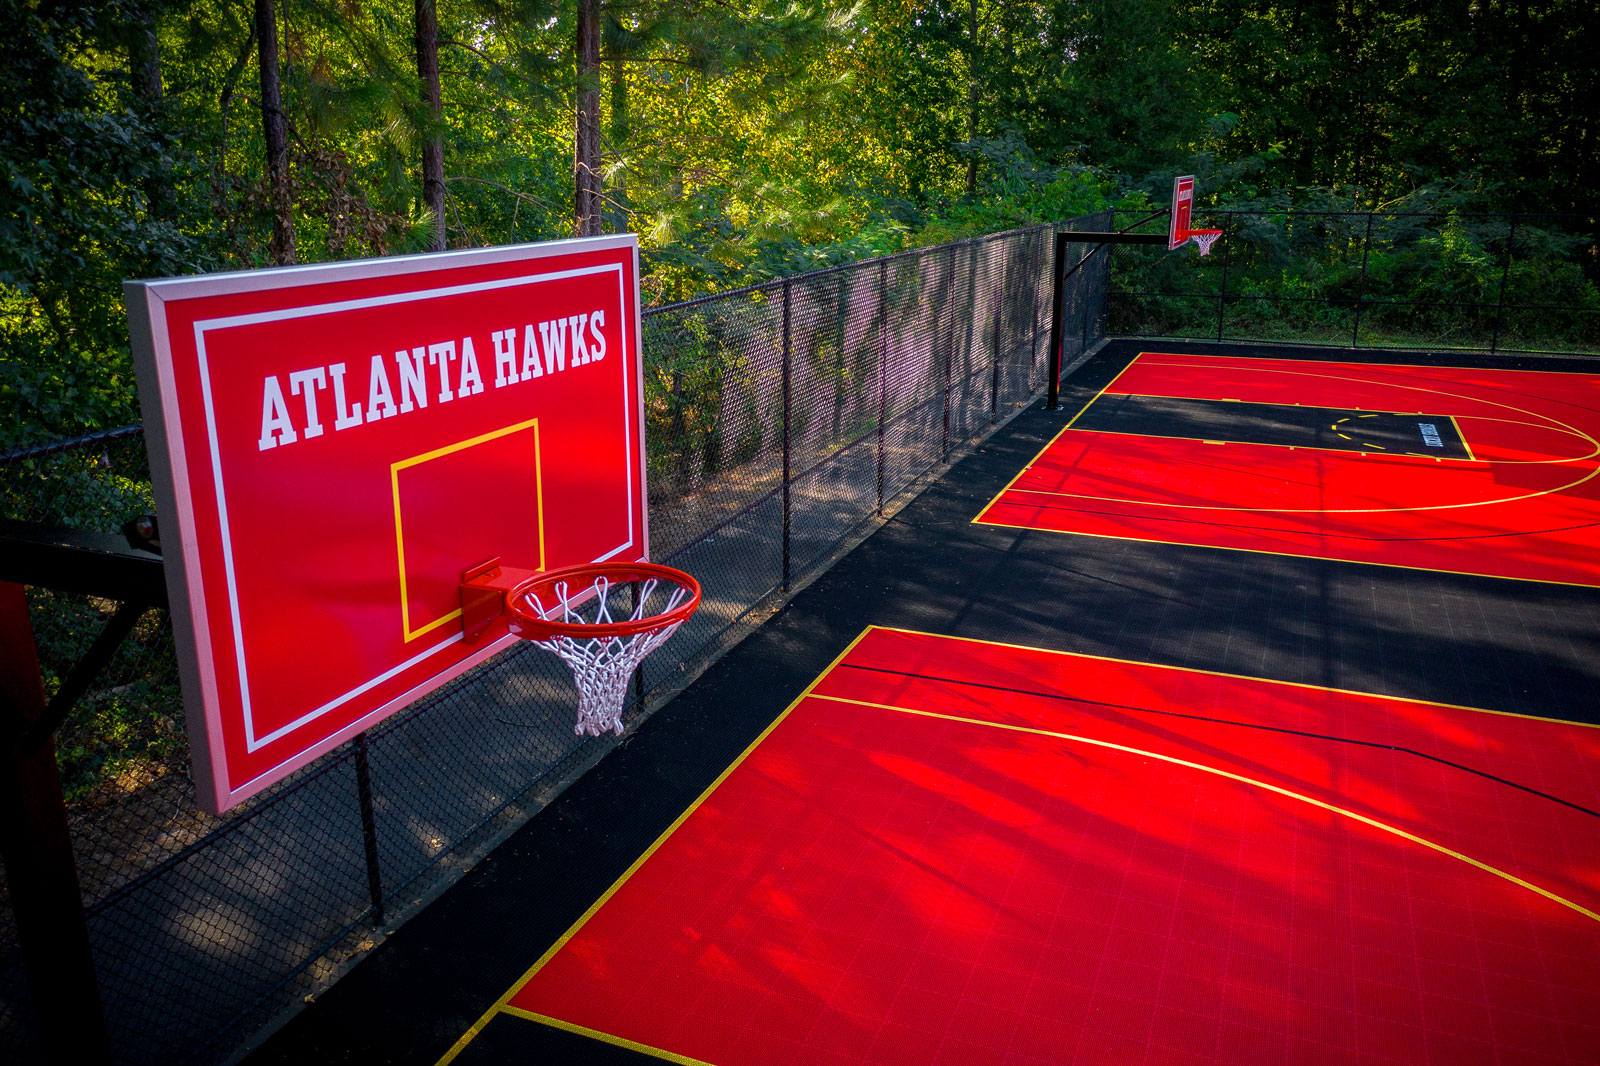 Closer view of the Atlanta Hawks hoops